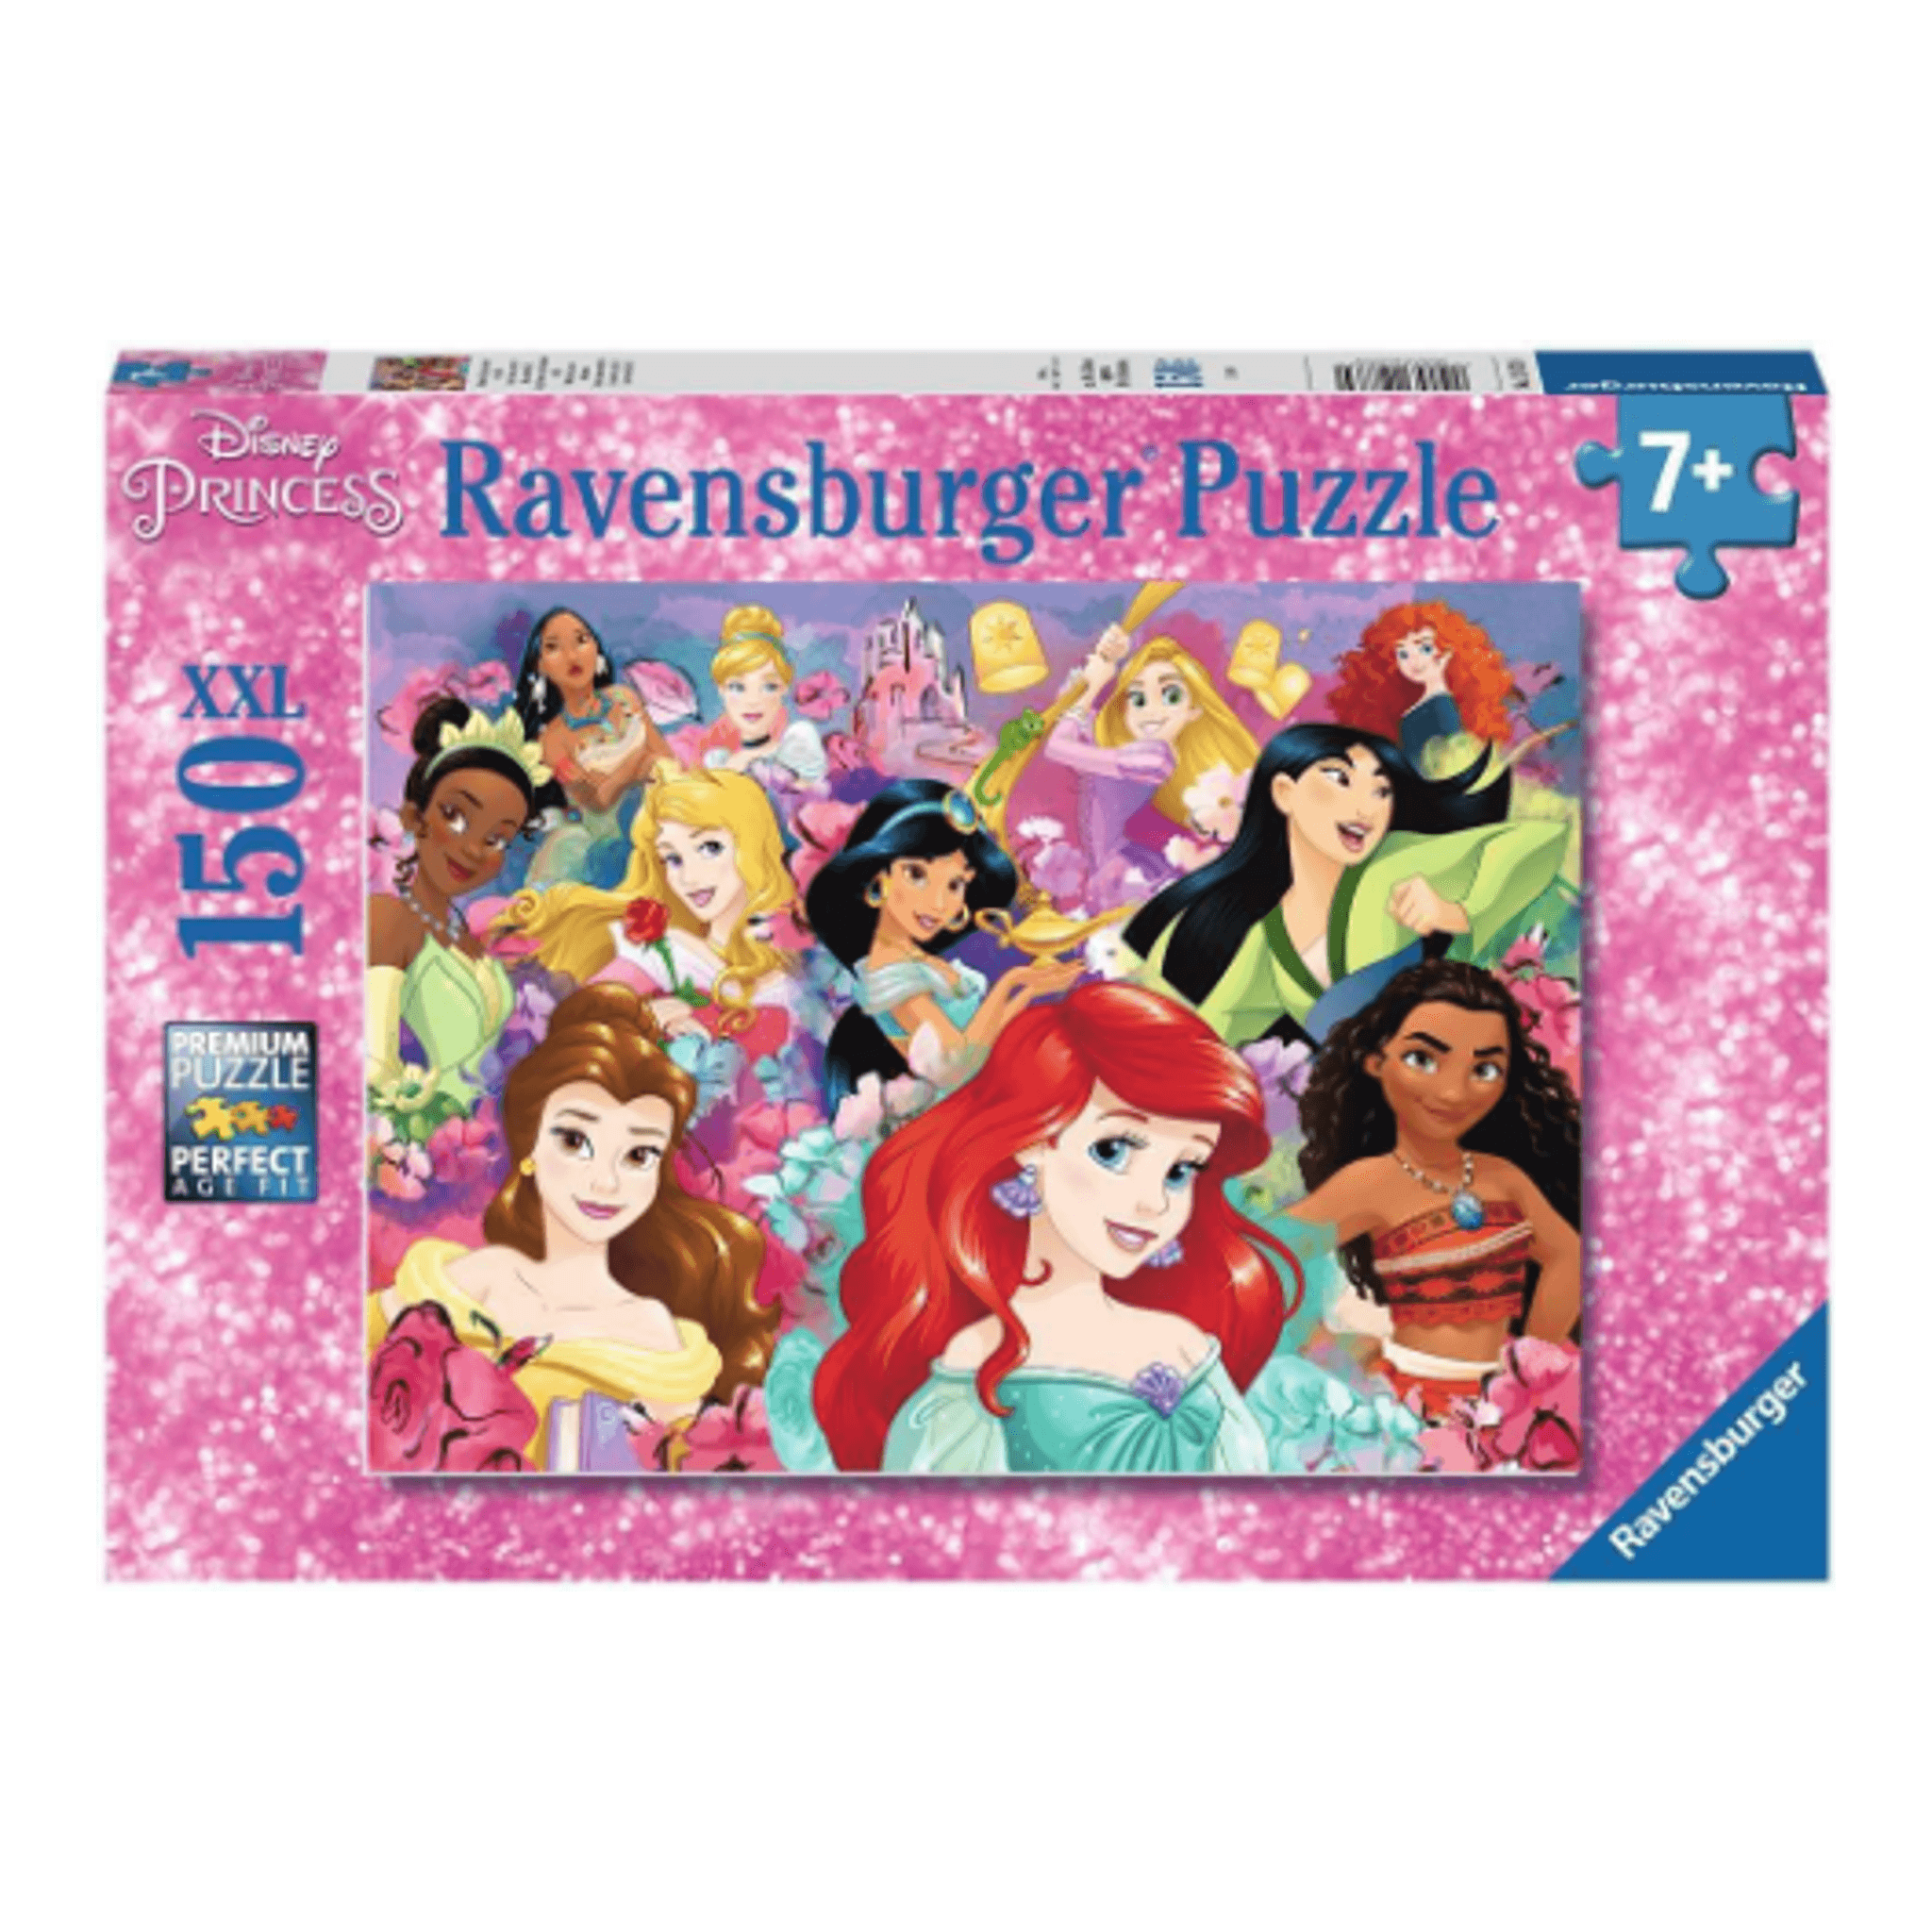 Ravensburger - Princess Dreams Can Come True Puzzle 150 Pieces - Toybox Tales